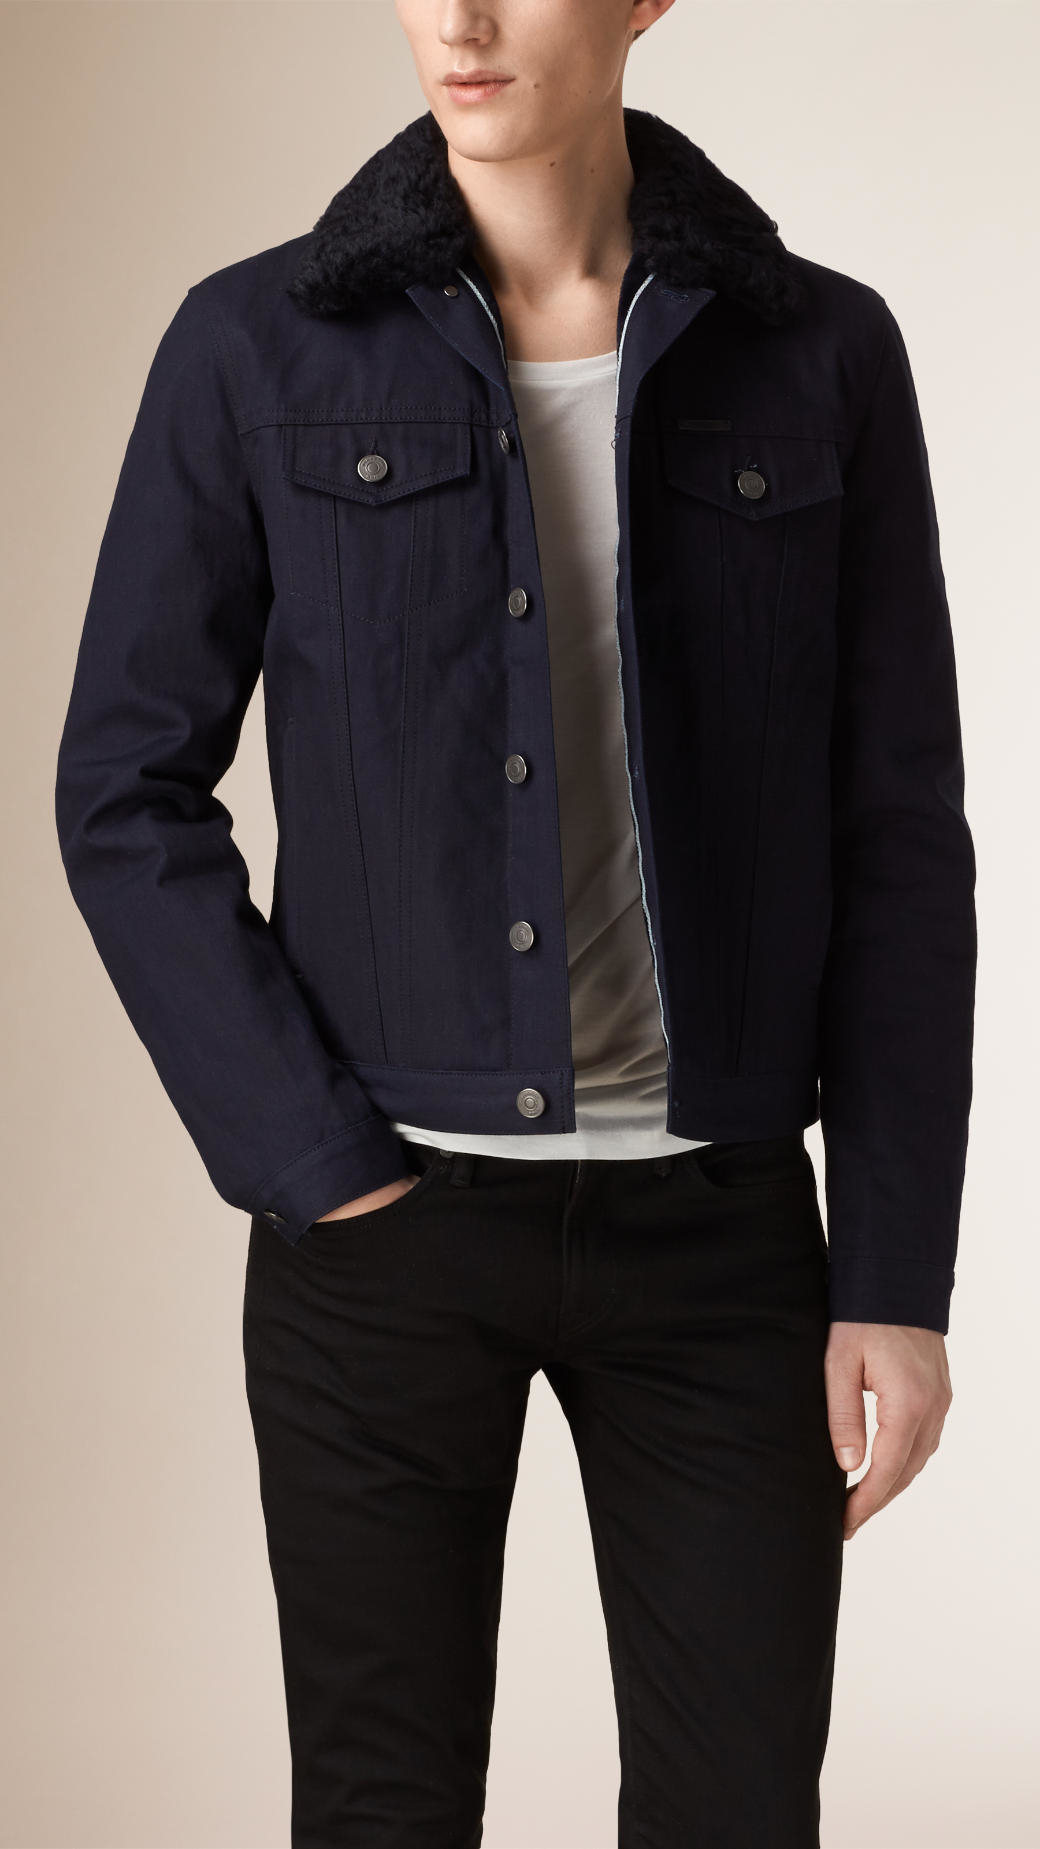 Lyst - Burberry Shearling-Lined Selvedge Denim Jacket in Blue for Men